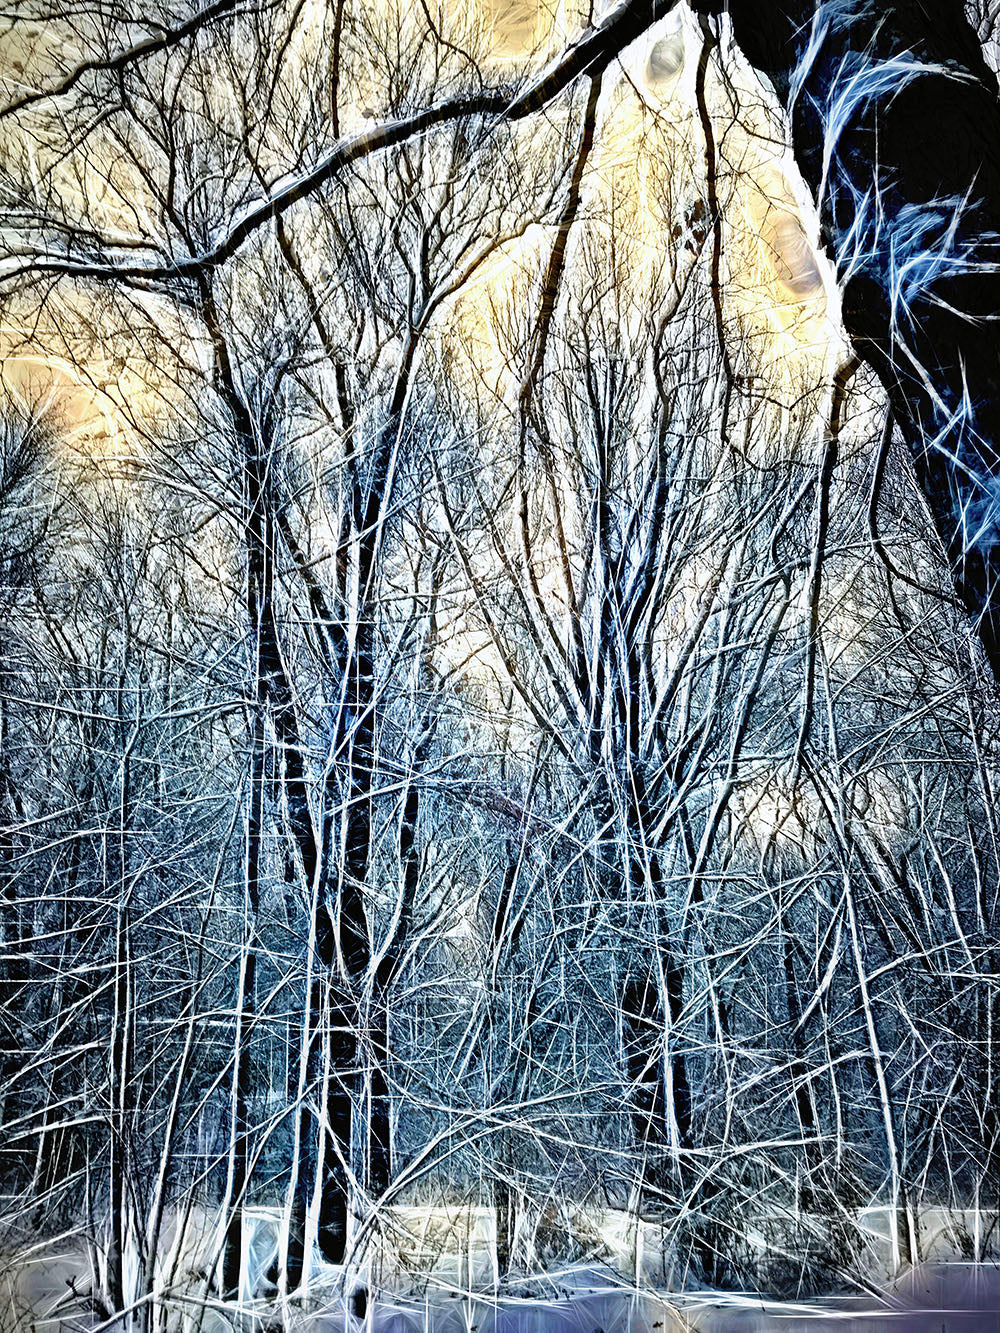 4 Oclock Winter Landscape